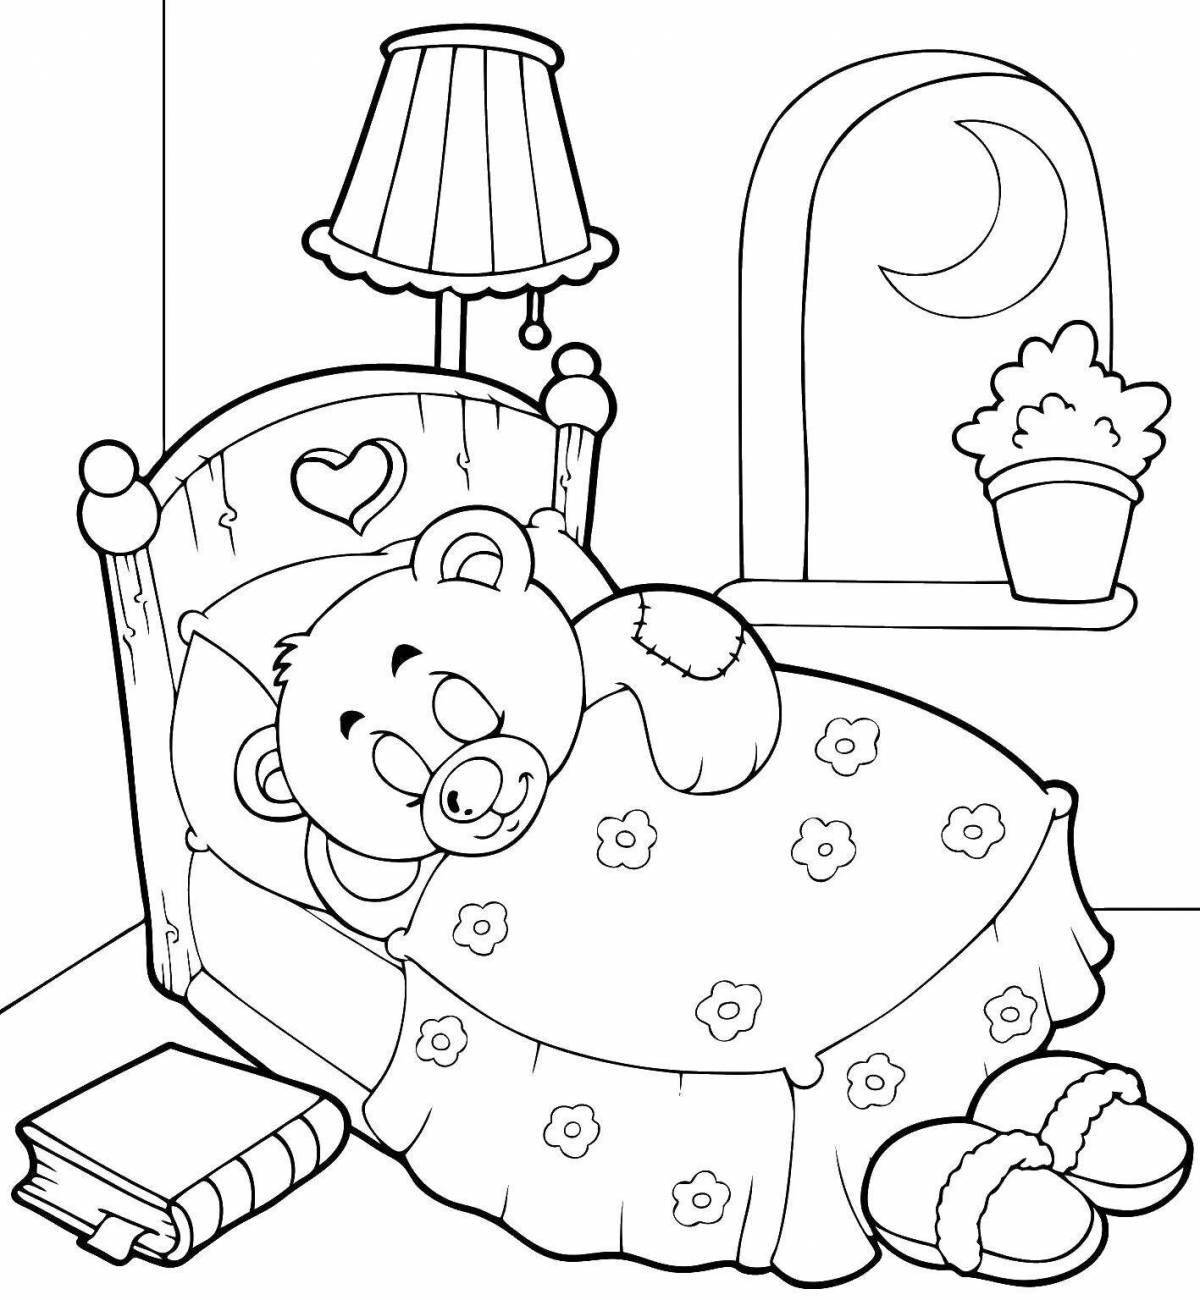 Dreamy sleeping bear coloring book